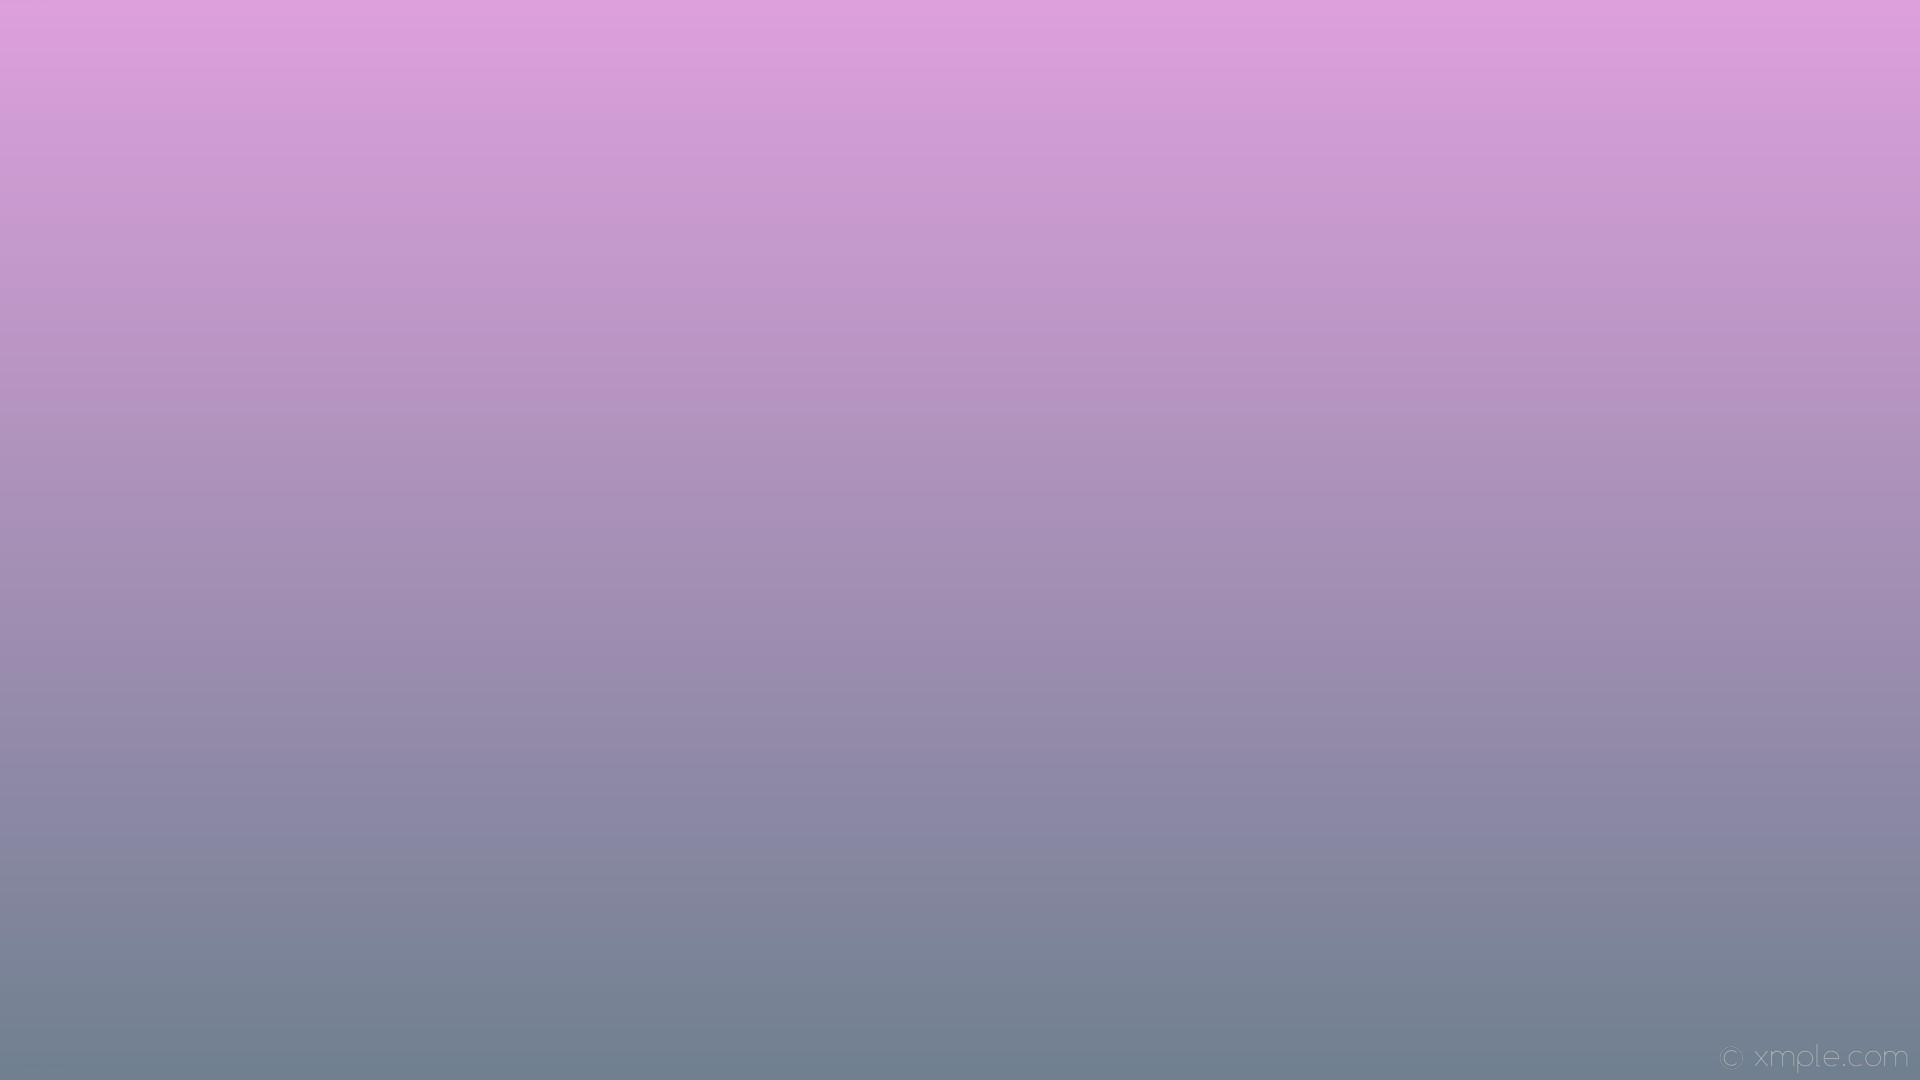 Wallpaper linear purple grey gradient plum slate gray #dda0dd 90